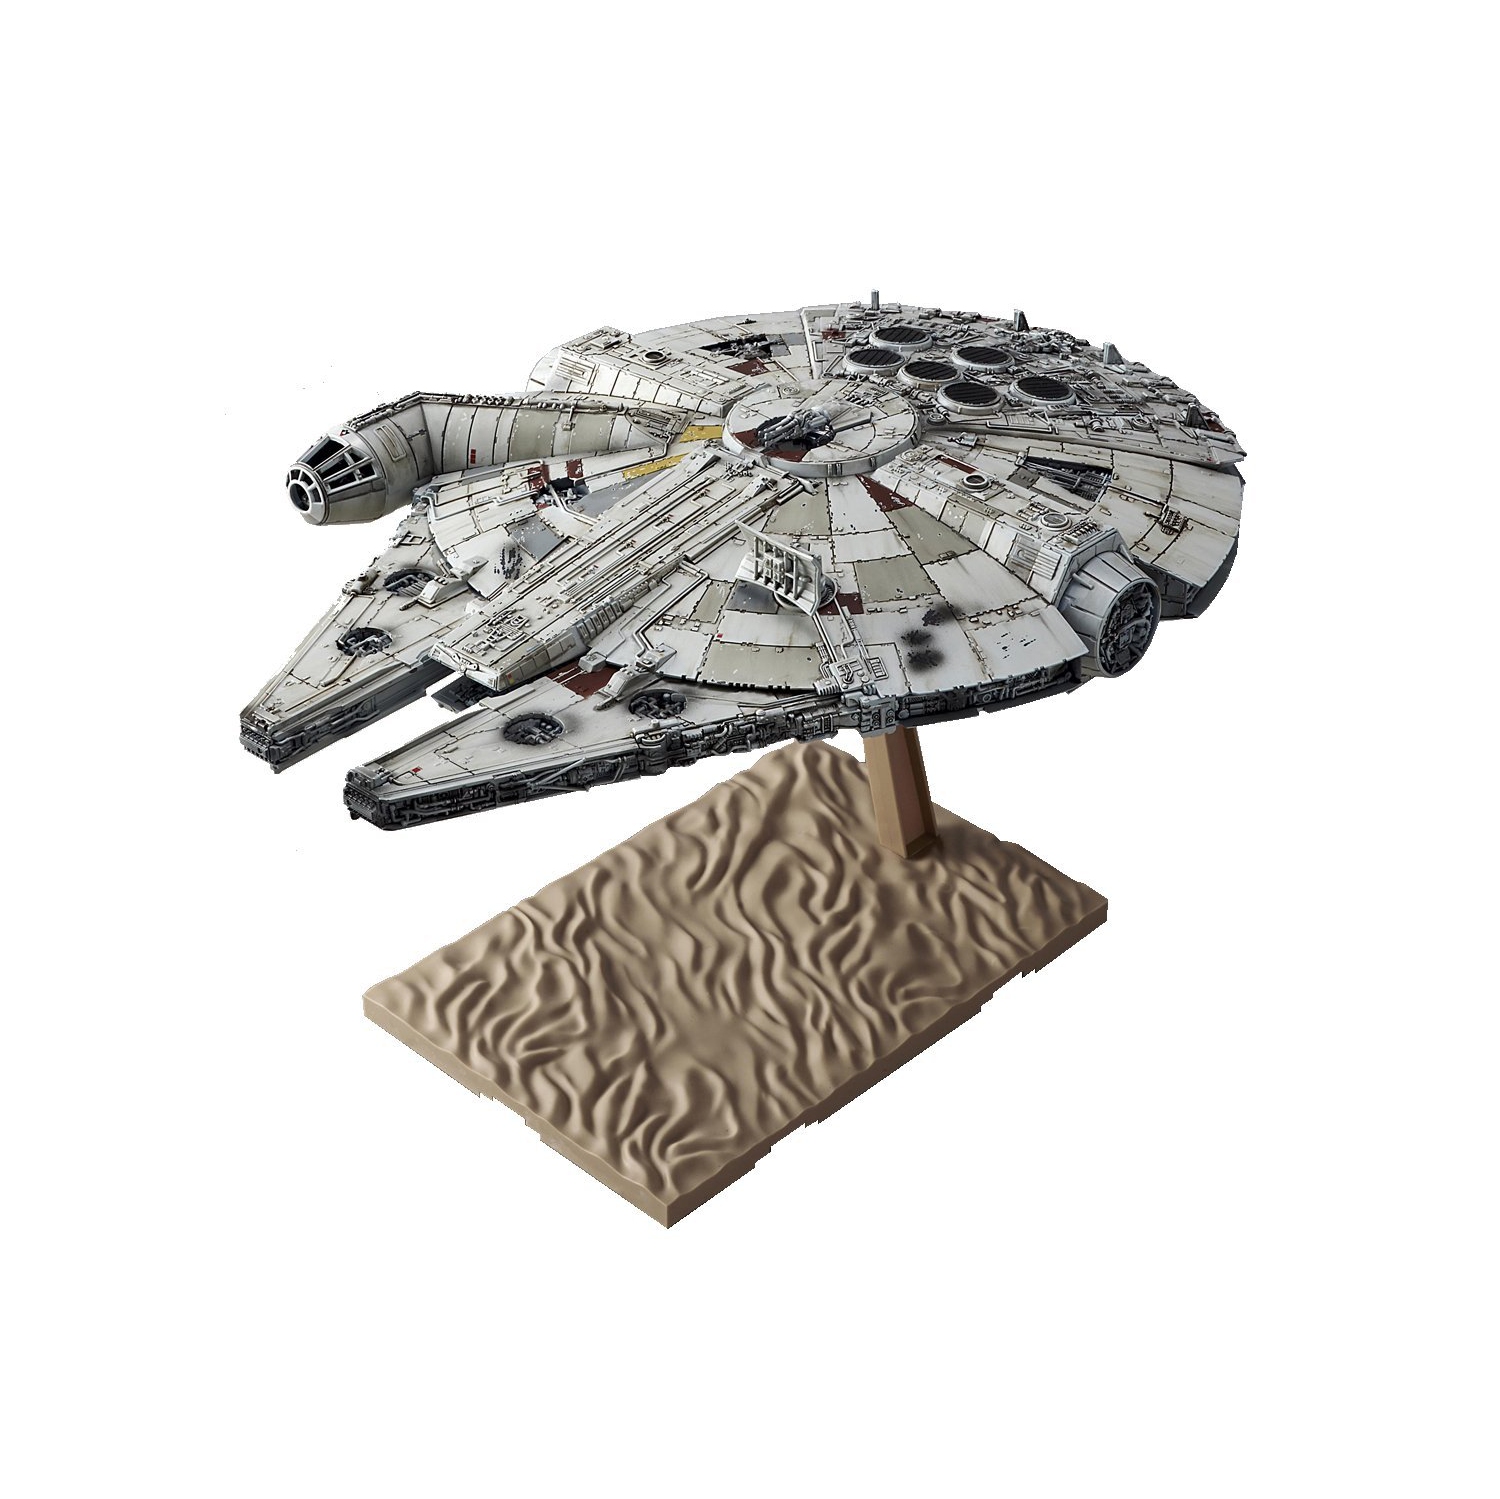 Star Wars 1/144 Scale Model Kit: Millennium Falcon "The Force Awakens" (Retired)